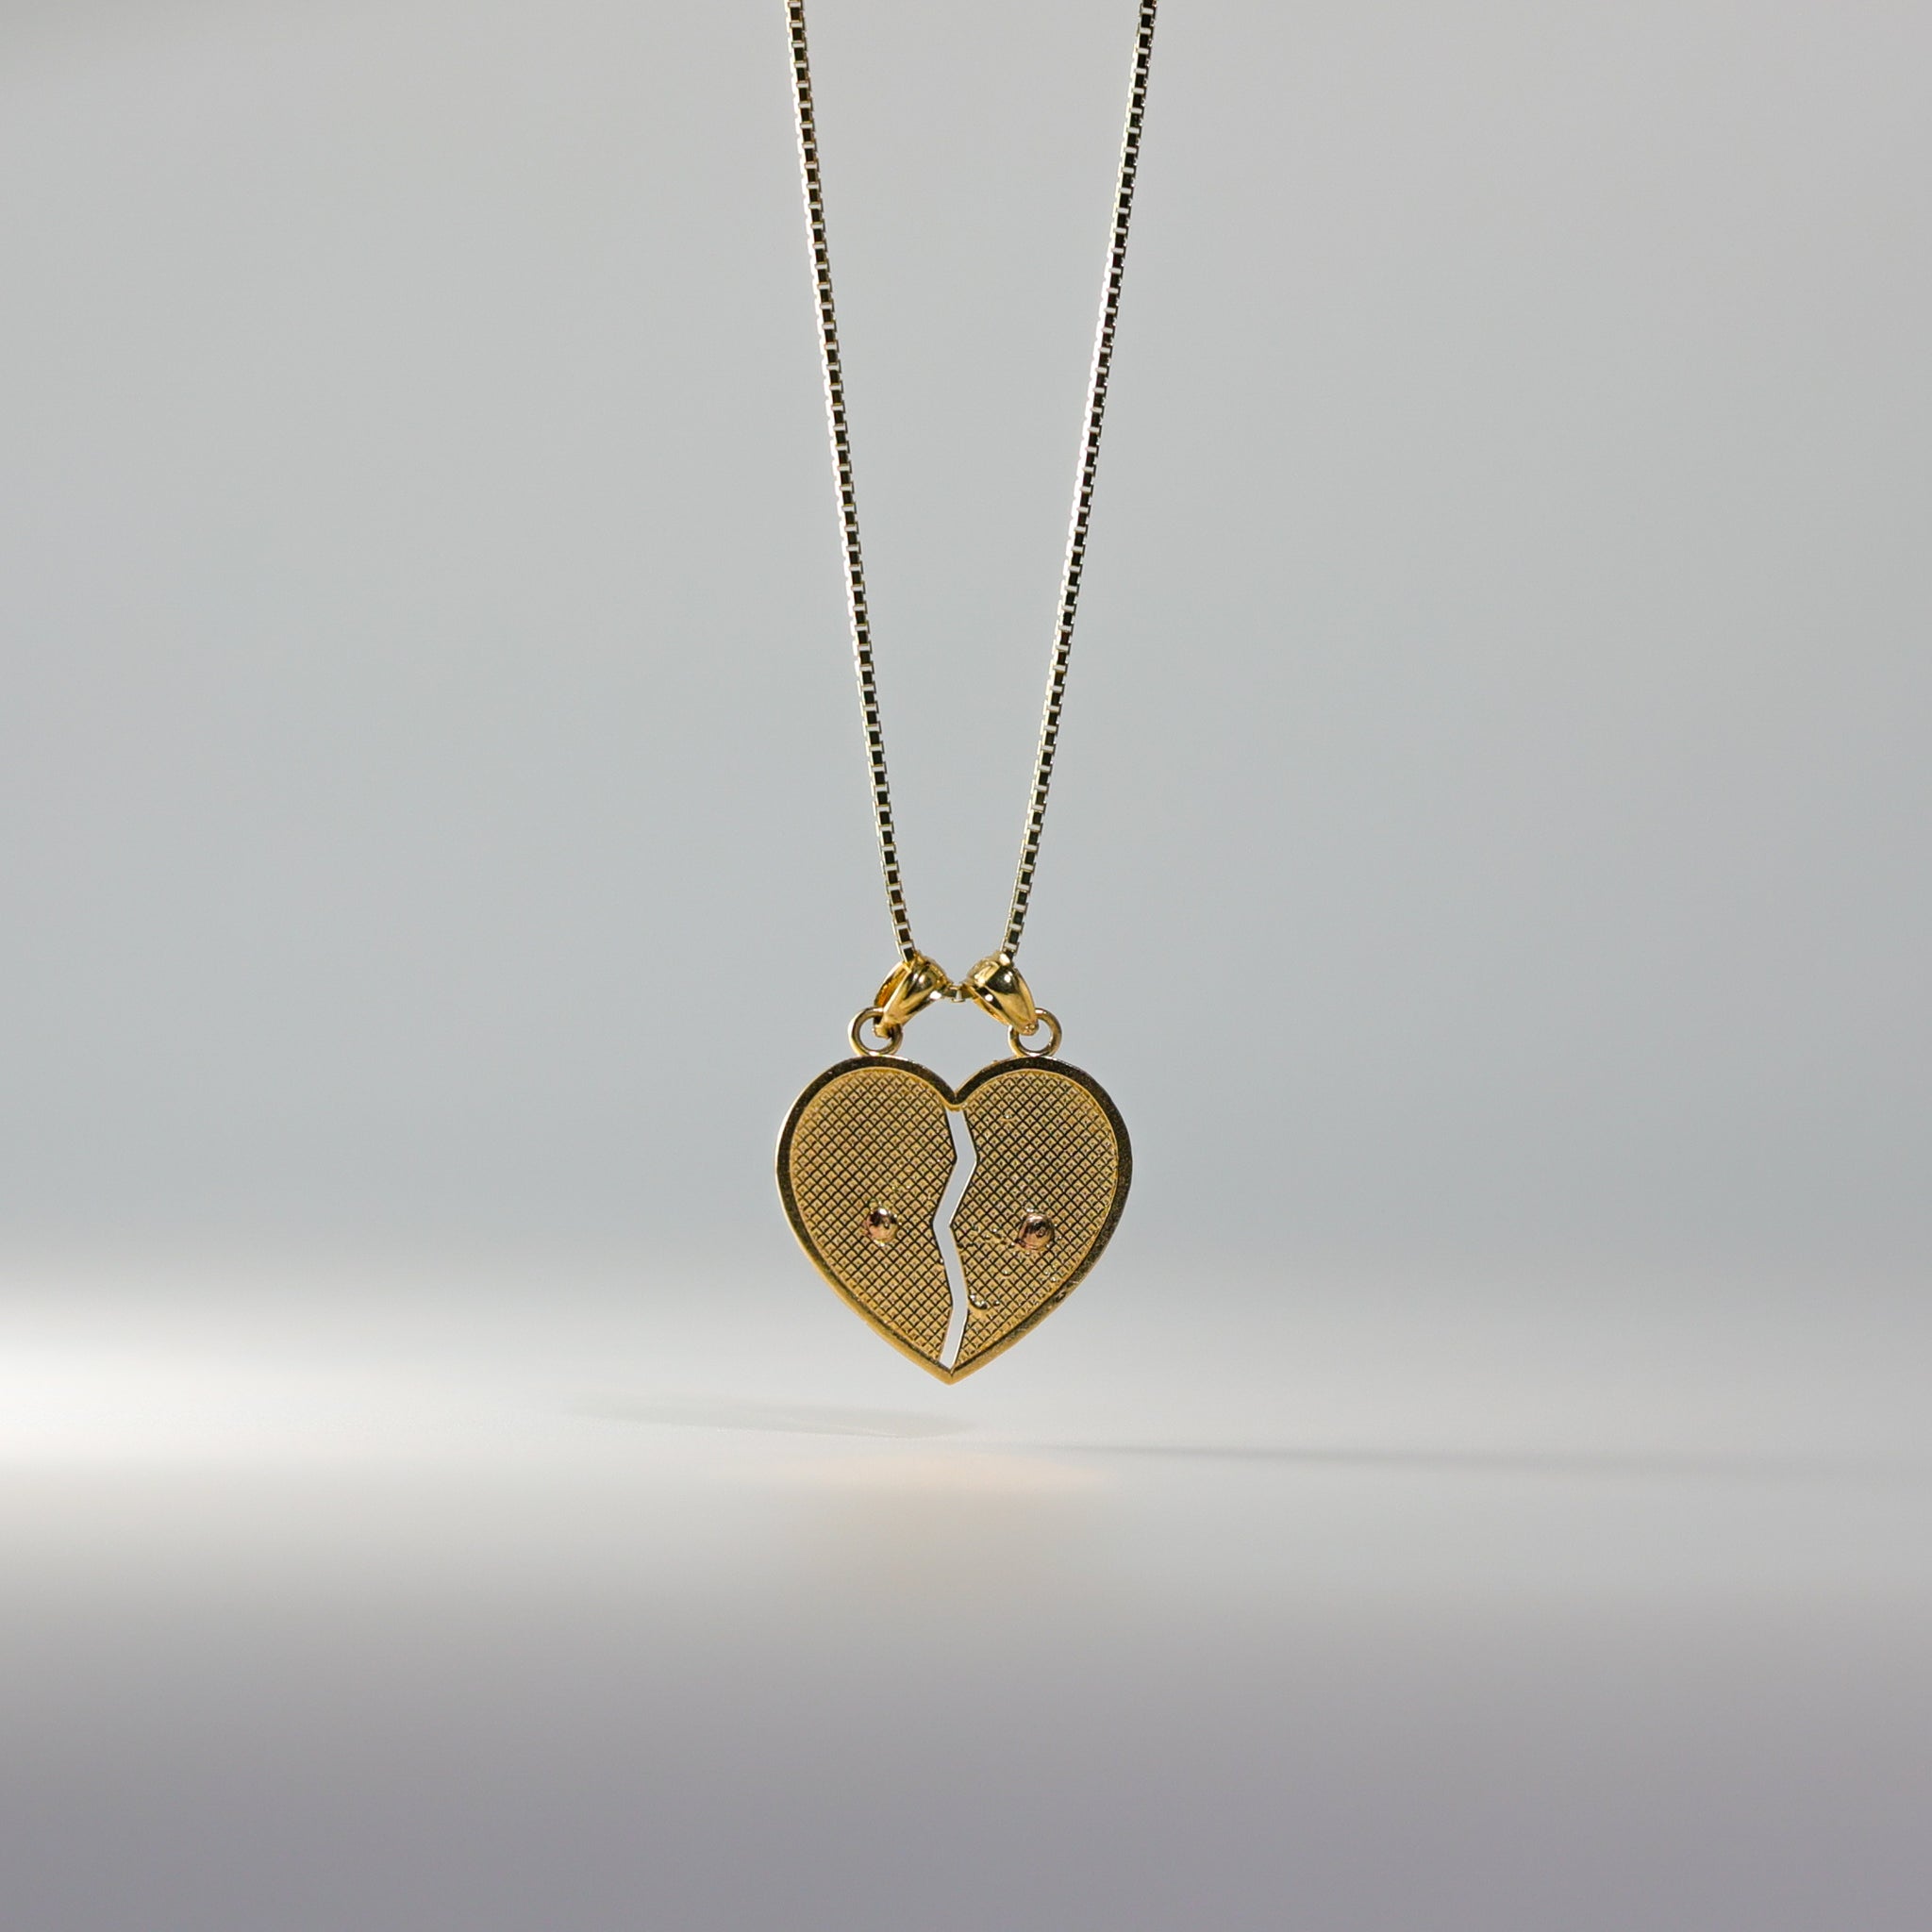 Gold Te Amo Heart Pendant Model-2375 - Charlie & Co. Jewelry